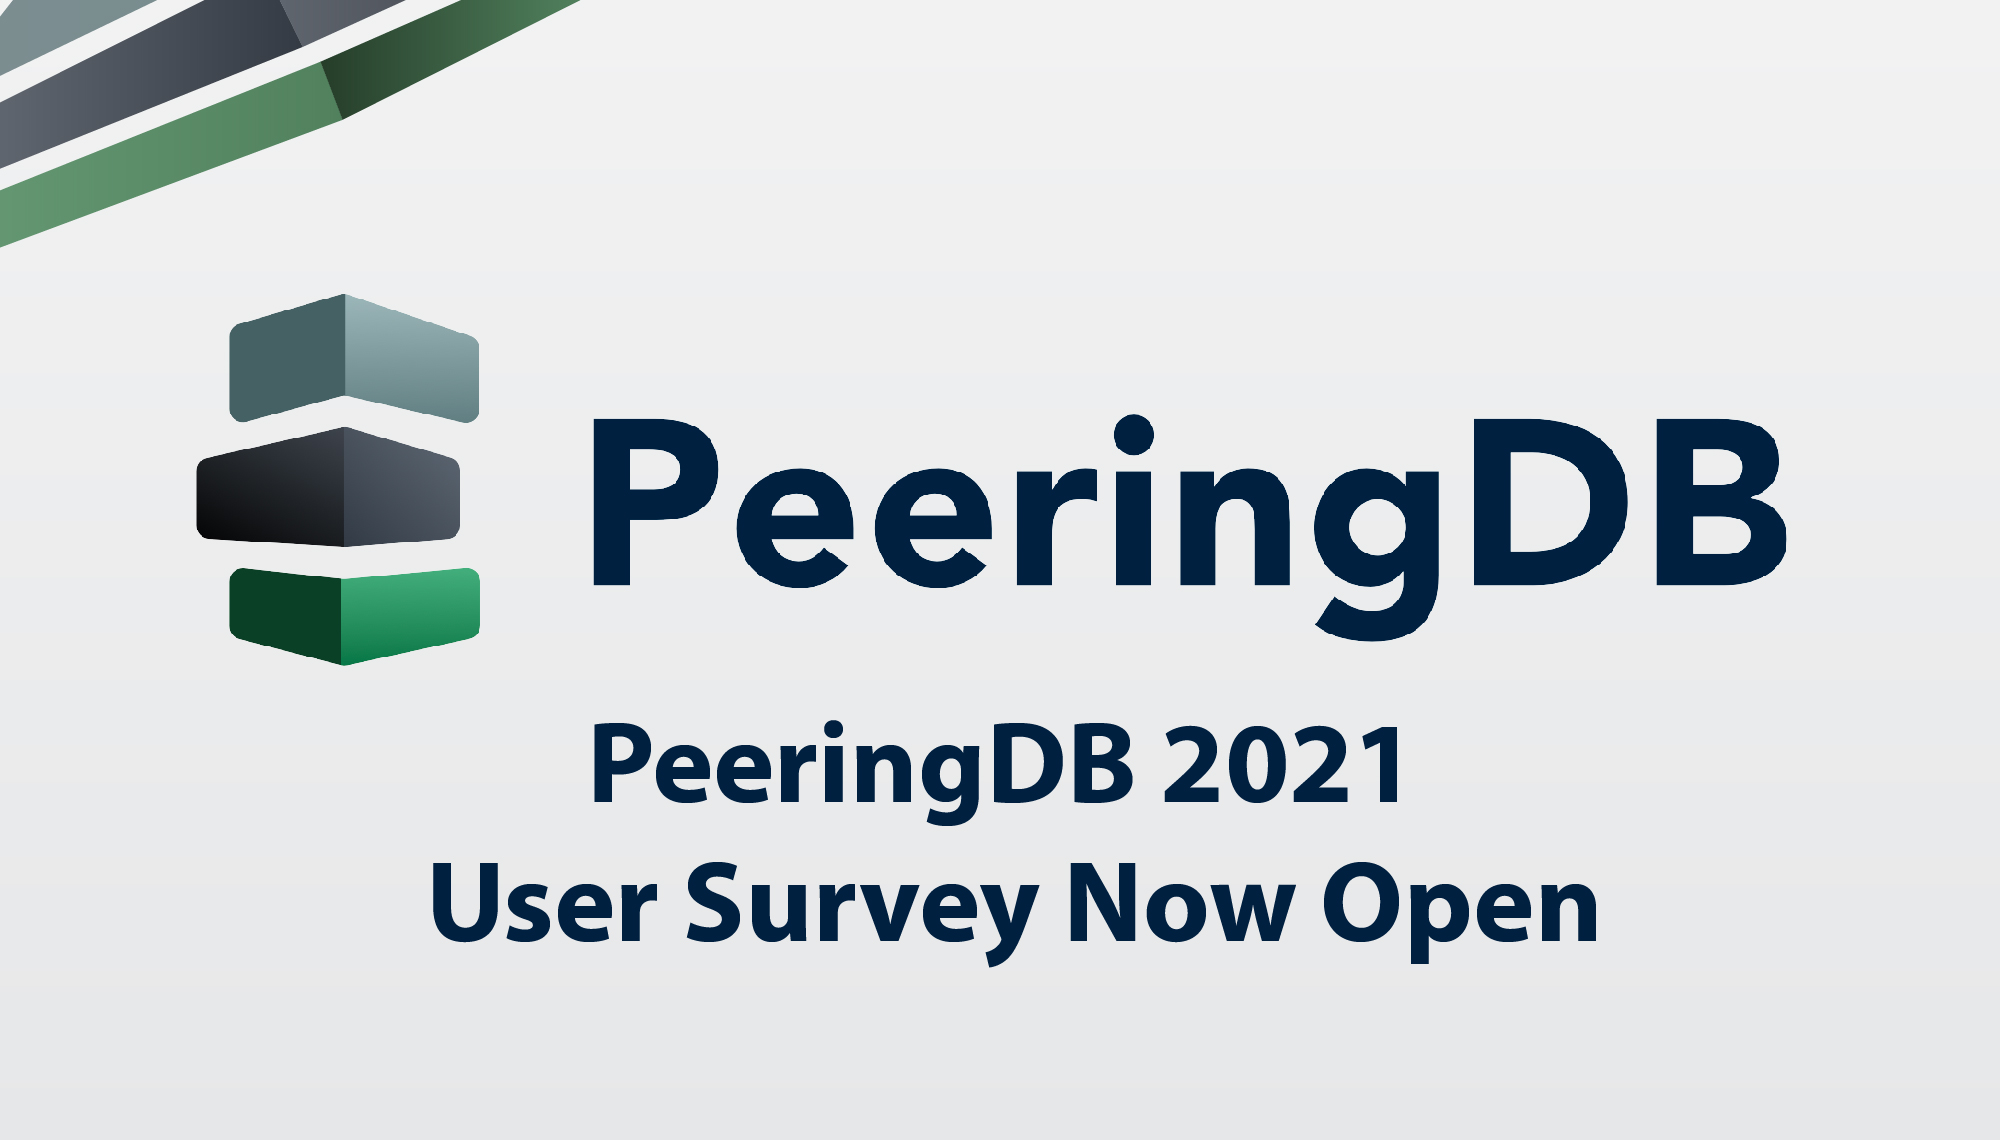 PeeringDB 2021 User Survey is Now Open